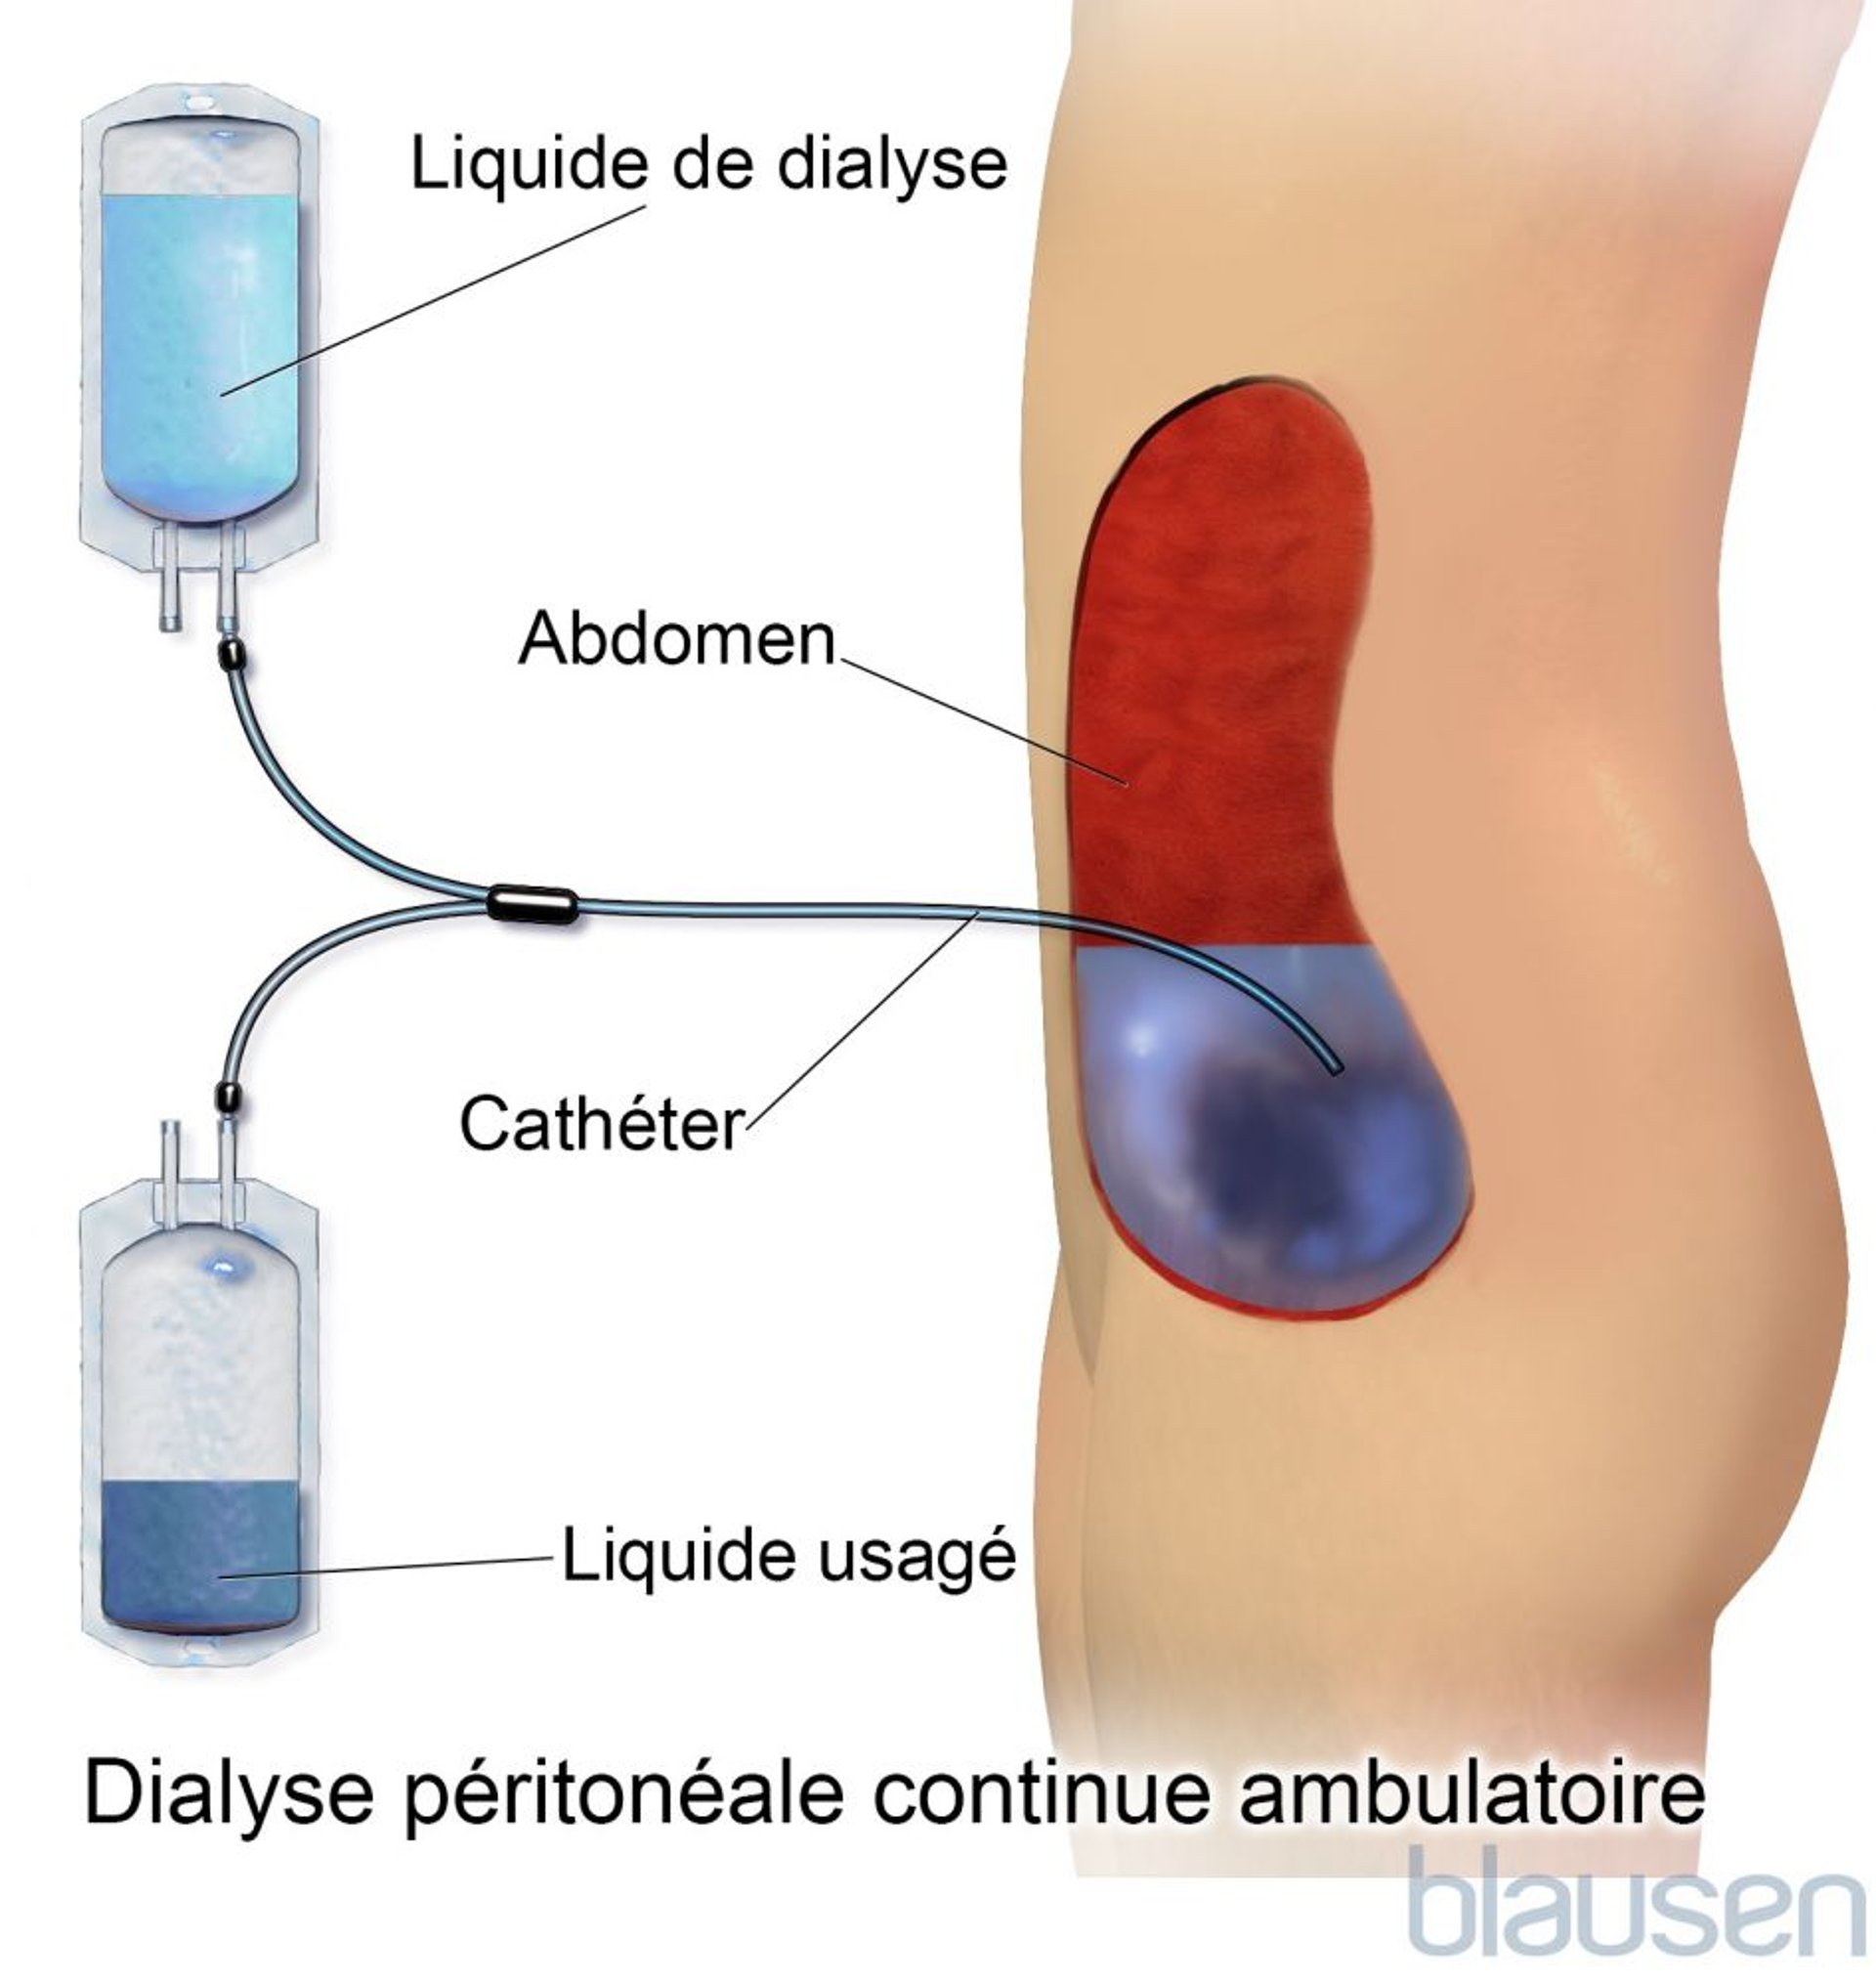 Dialyse péritonéale continue ambulatoire